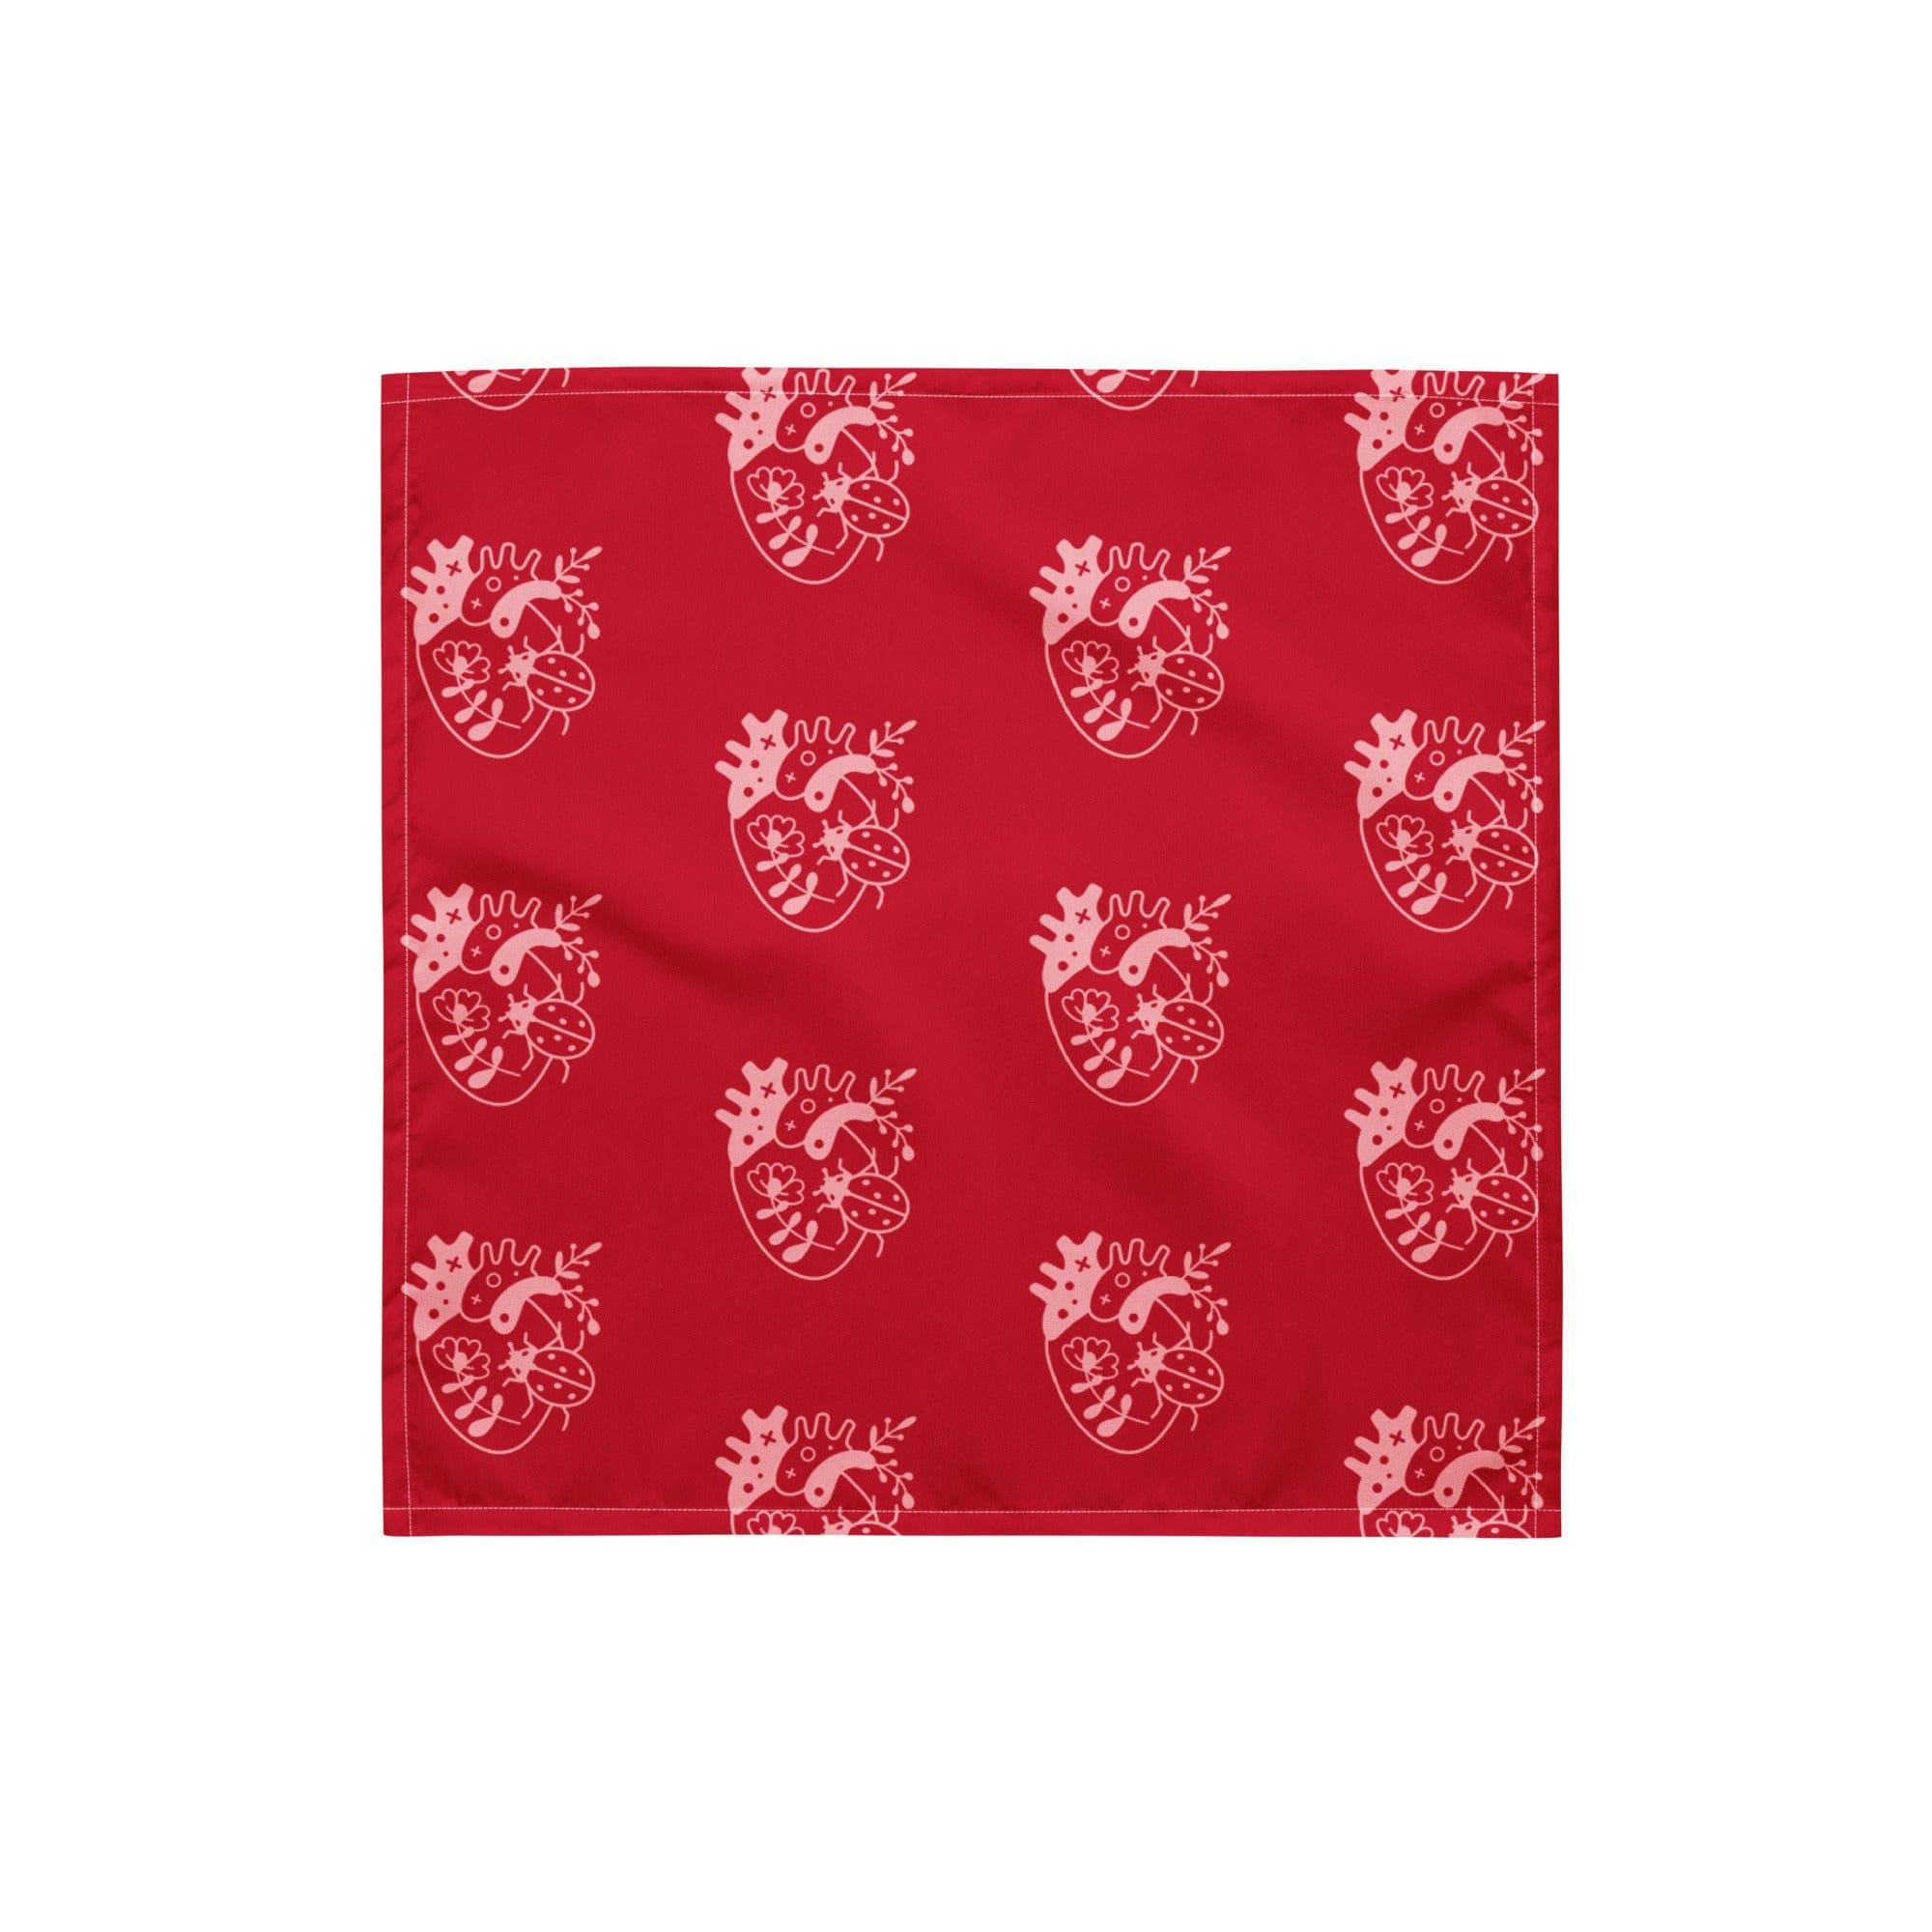 Ladybug Shaped Hearts on Red Background Pattern Luxury Headband Neck Scarf - TopKoalaTee